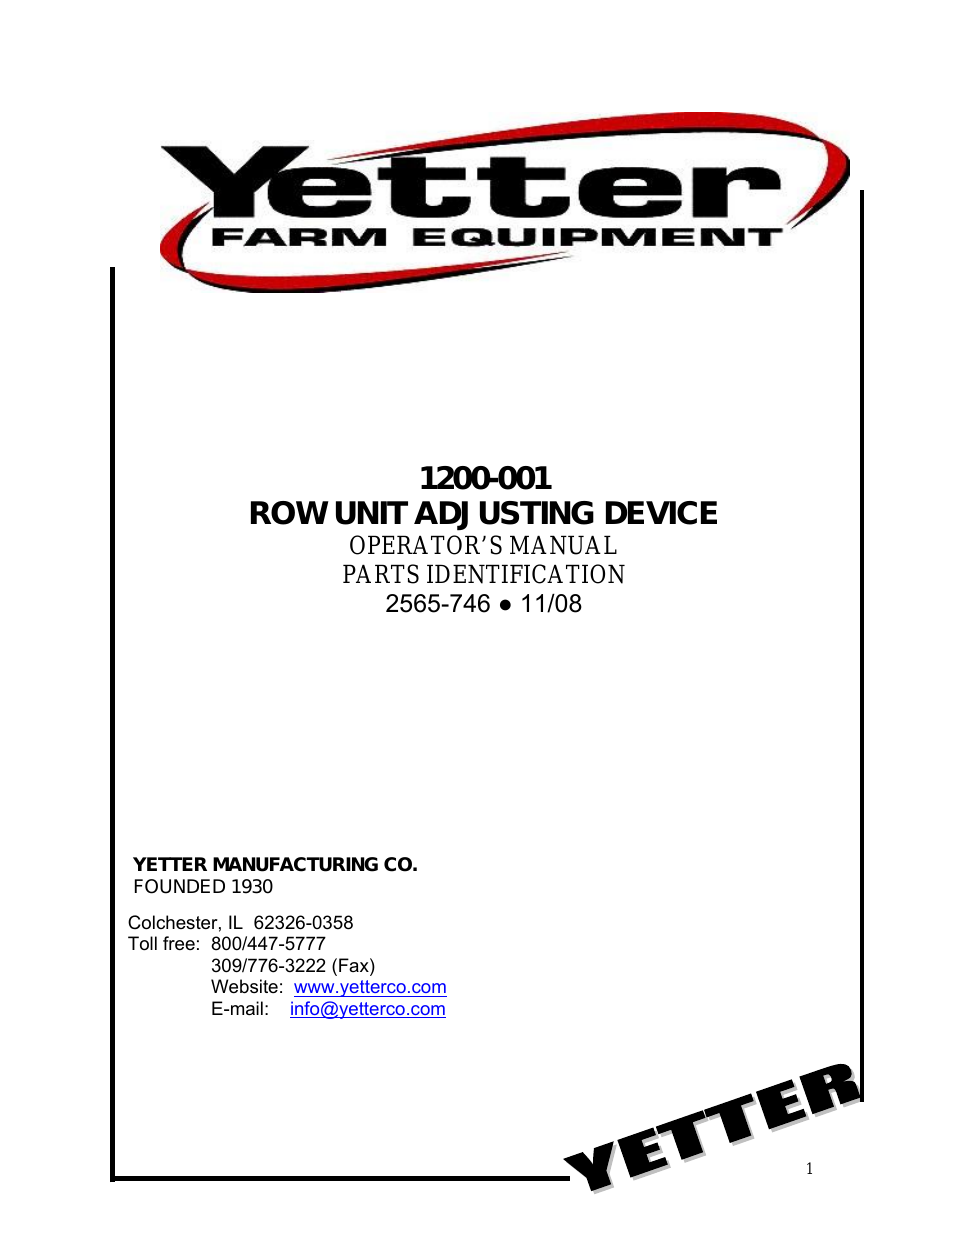 1200-001 Row Unit Adjusting Device